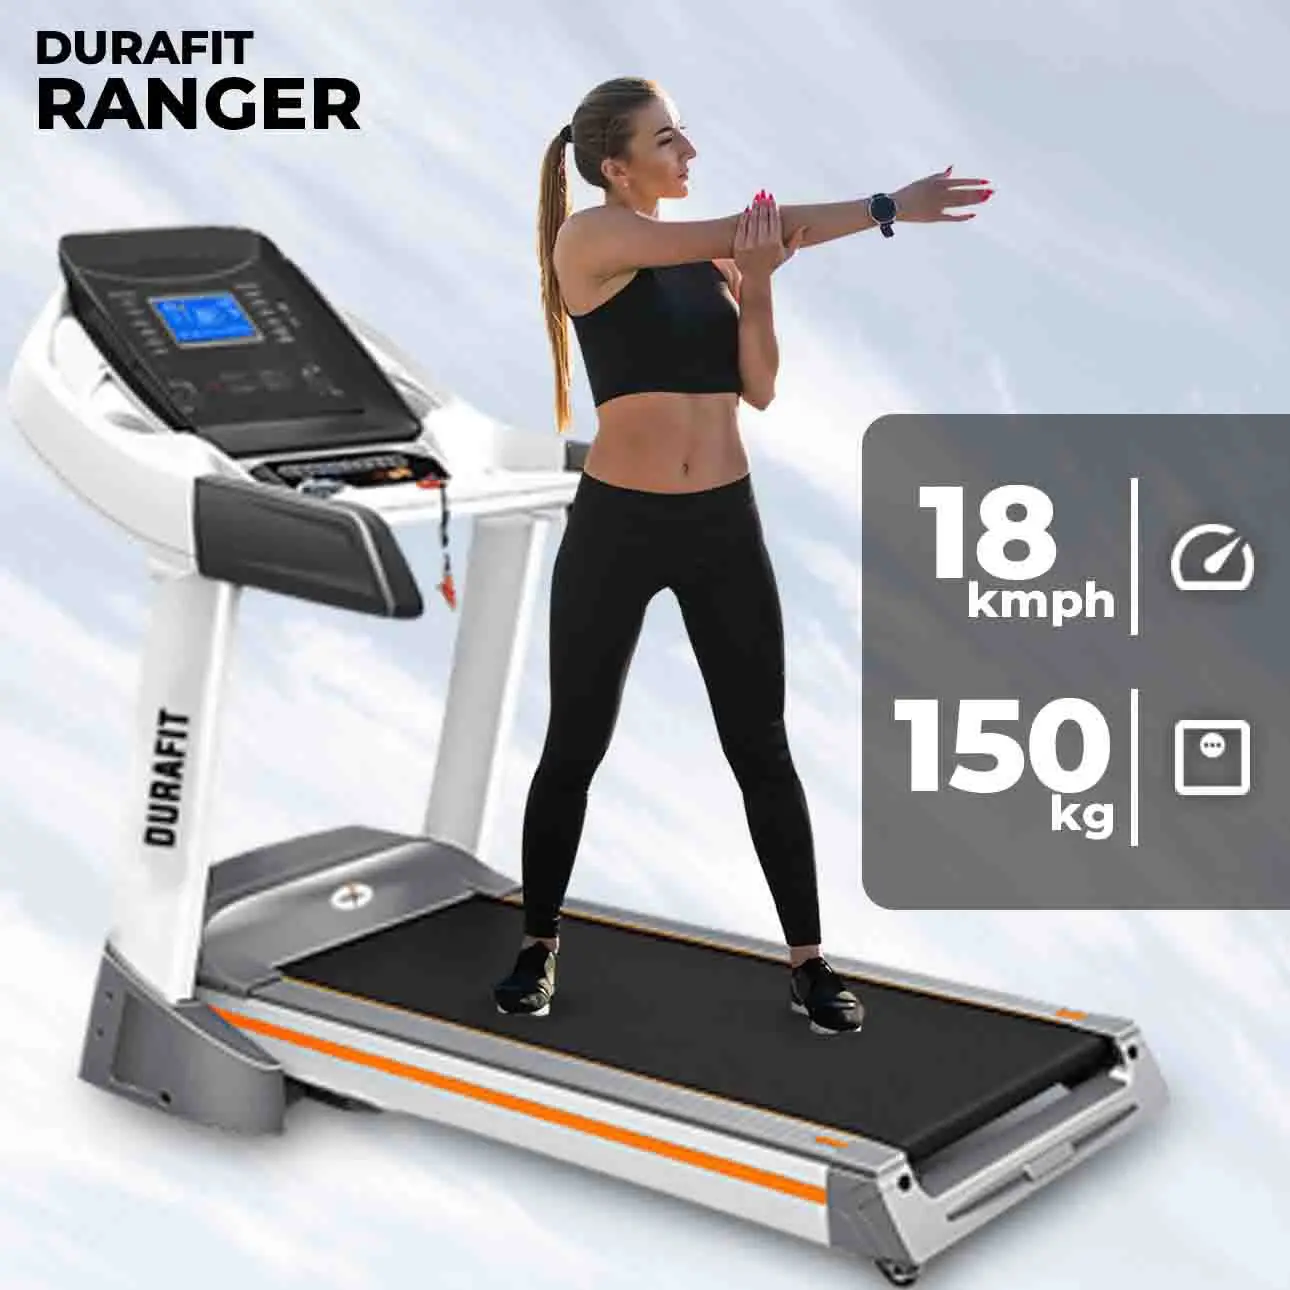 Durafit Ranger Treadmill with Max User Weight 150kg